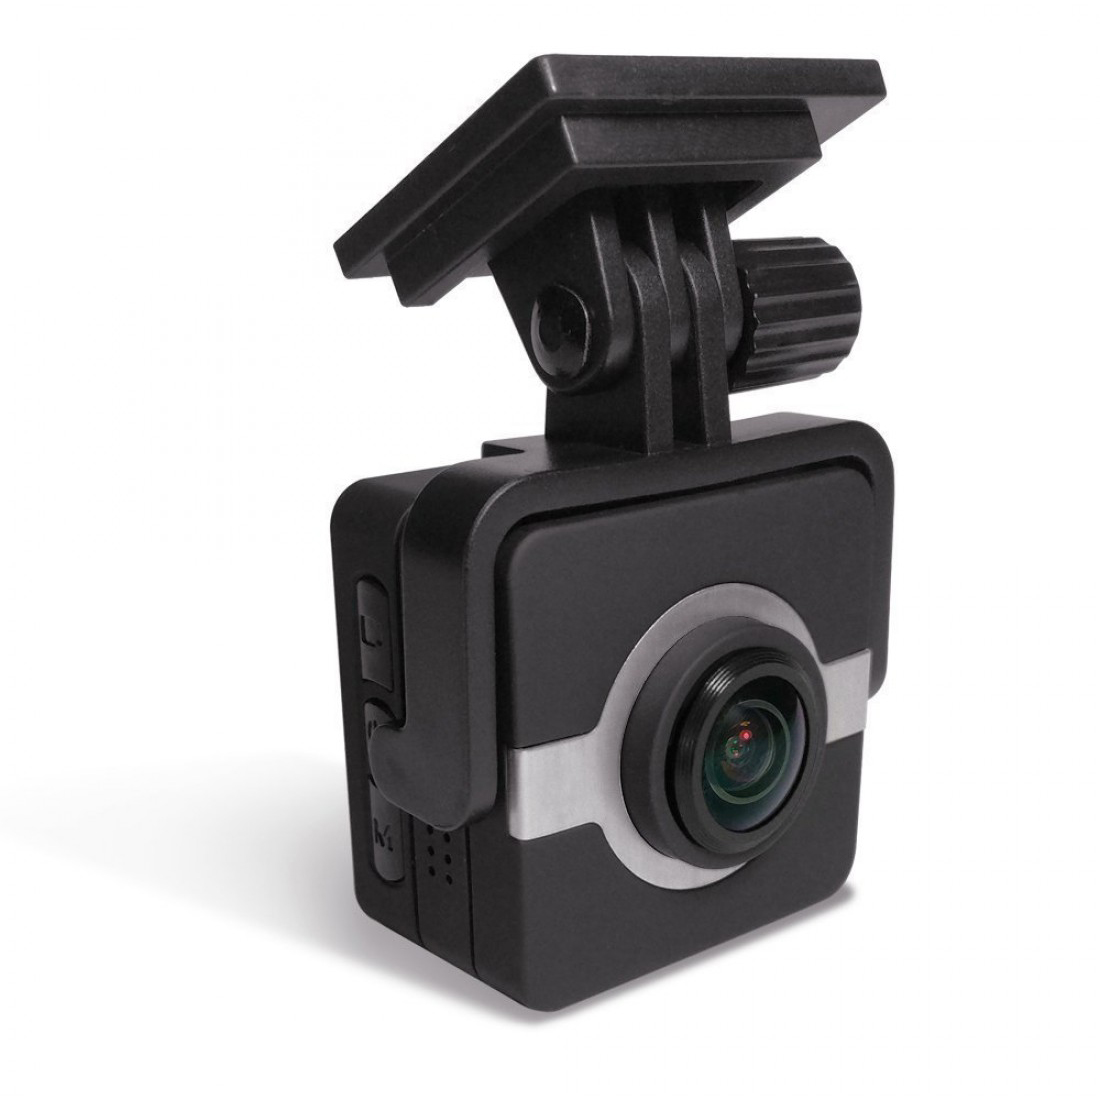 Good Quality4K ACTION CAM- Dash Camera X1 4K WIFI Mini HD 1080p 160 Wide Angle Dashboard Camera Recorder Car Dash Cam with G-Sensor Loop Recording Car DVR (Car DVR- Pro Edition Silver) – MATECAM